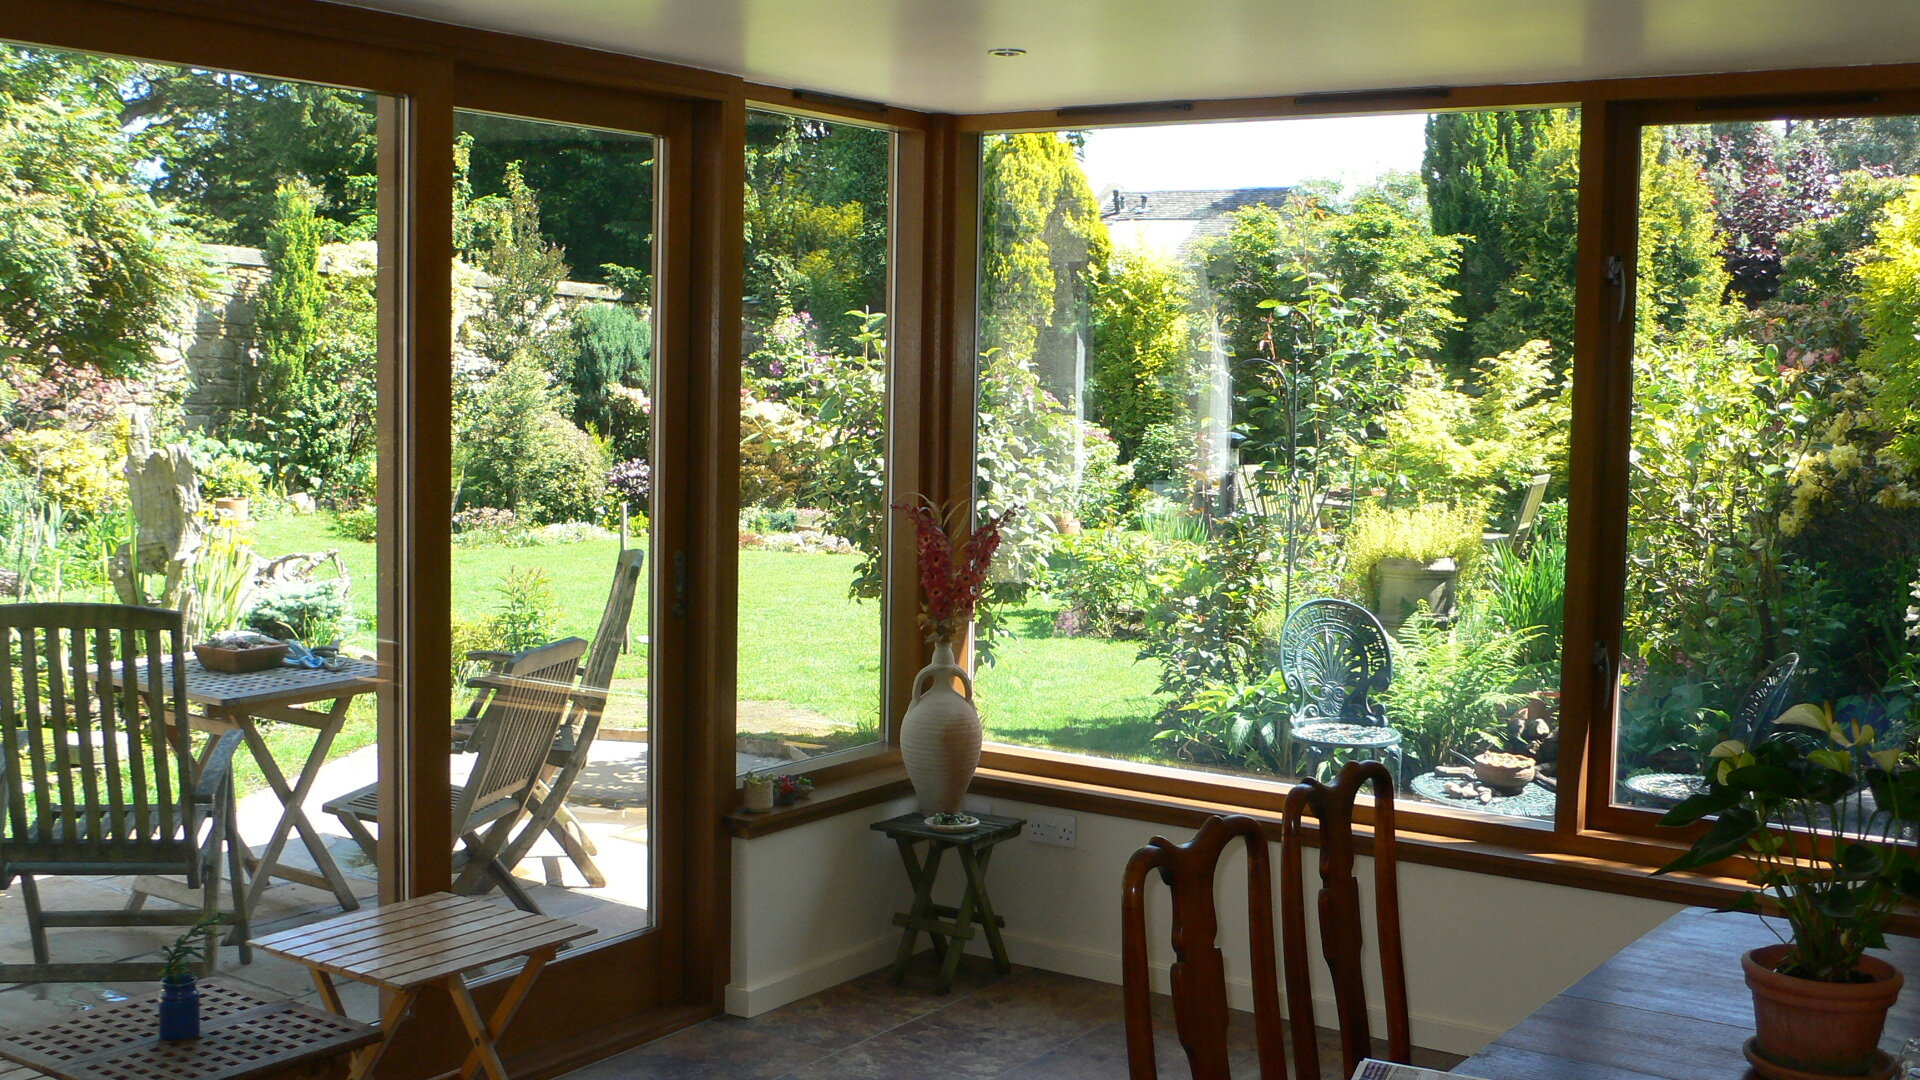  The interior captures wonderful views of the established garden. 